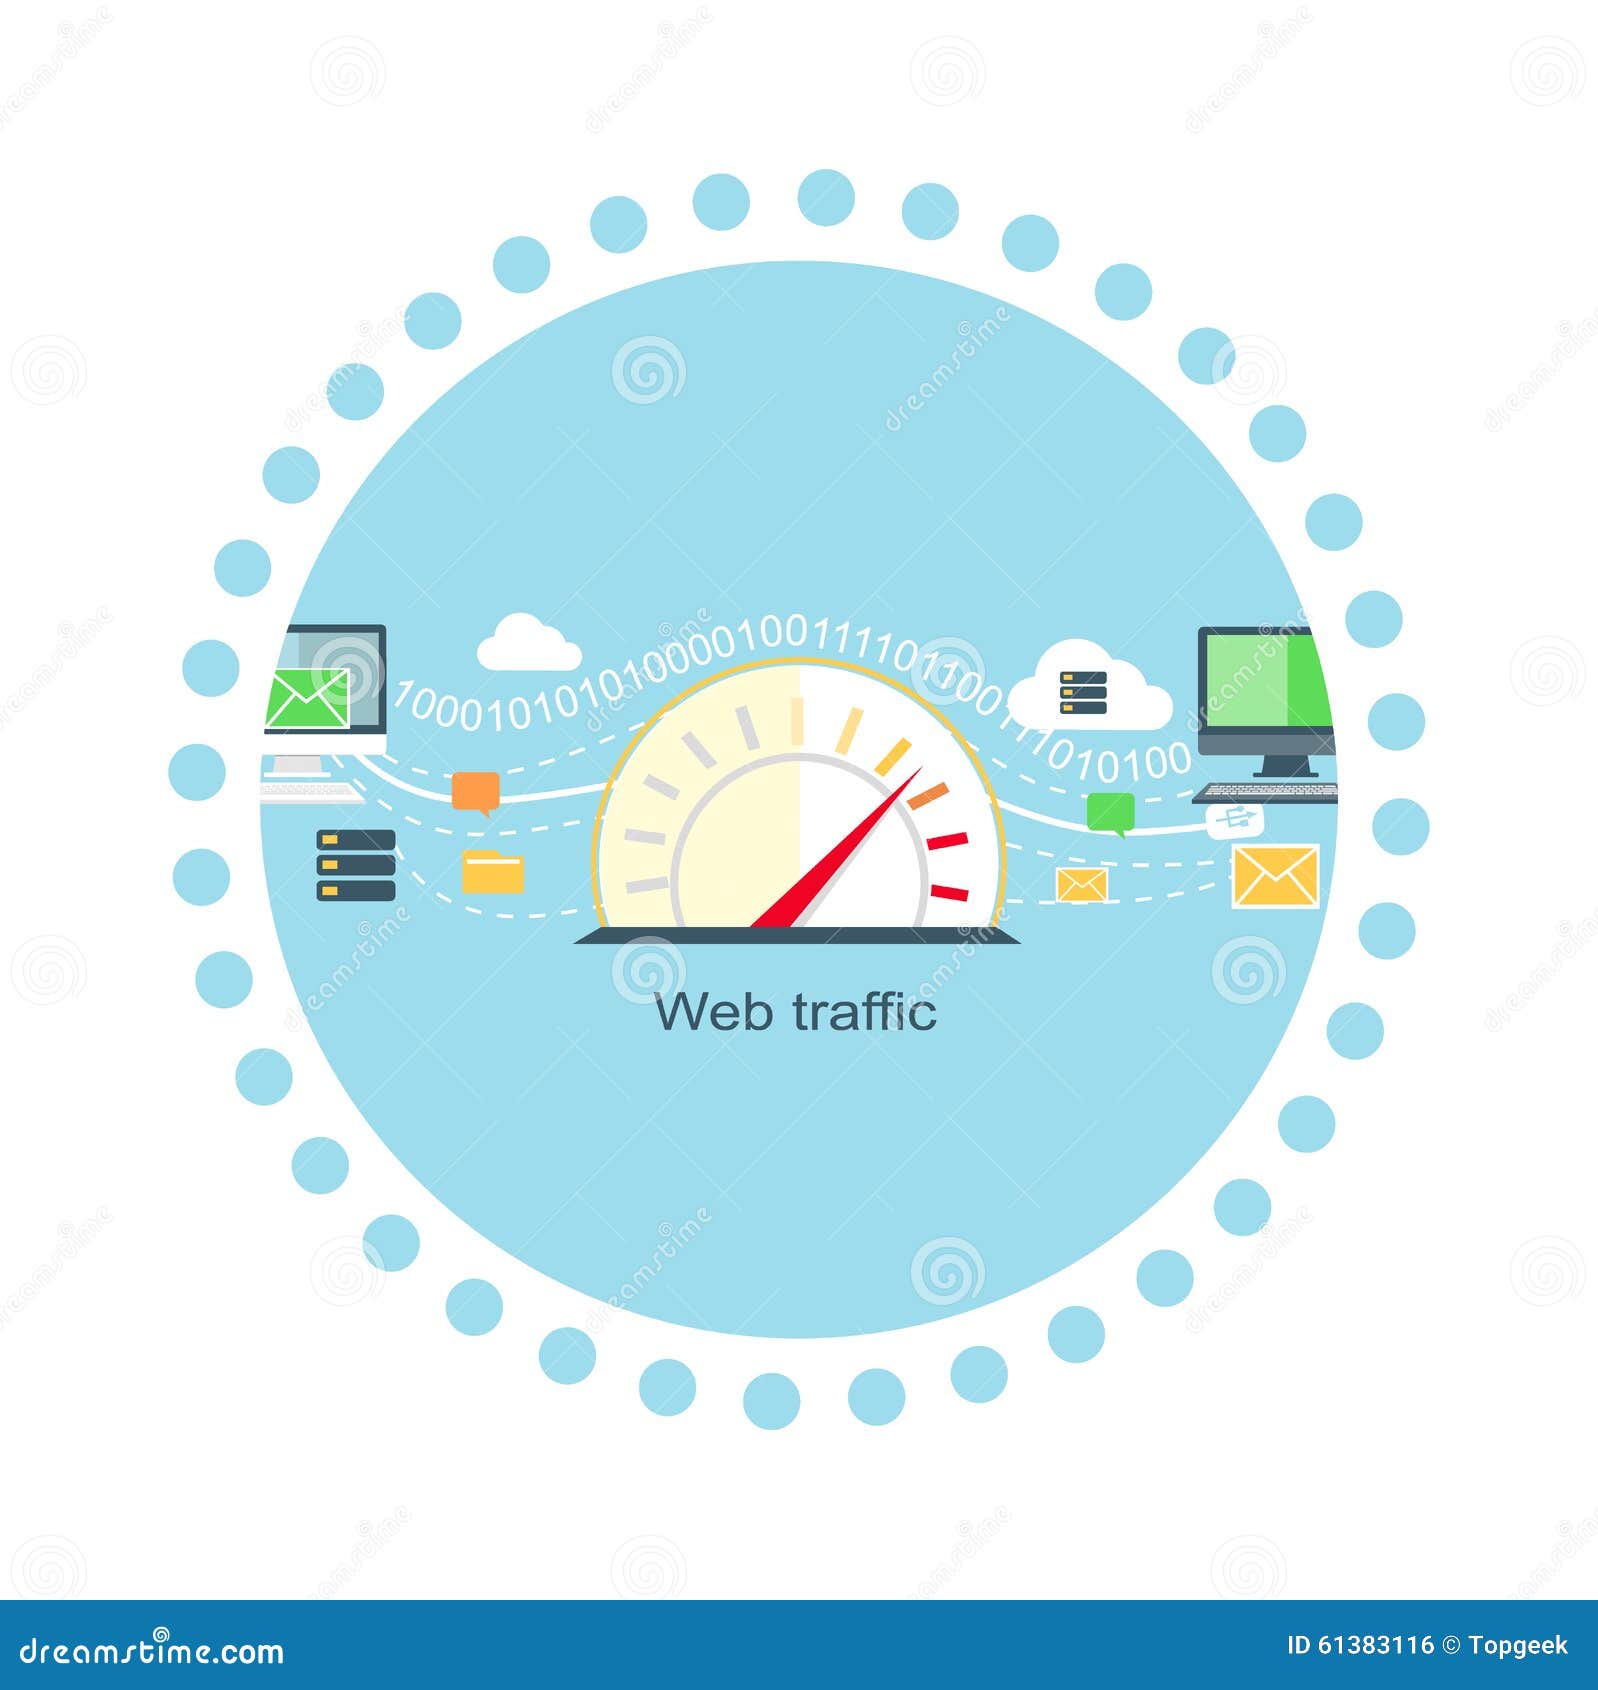 Web Traffic Internet Icon Flat Isolated Stock Vector - Image: 61383116